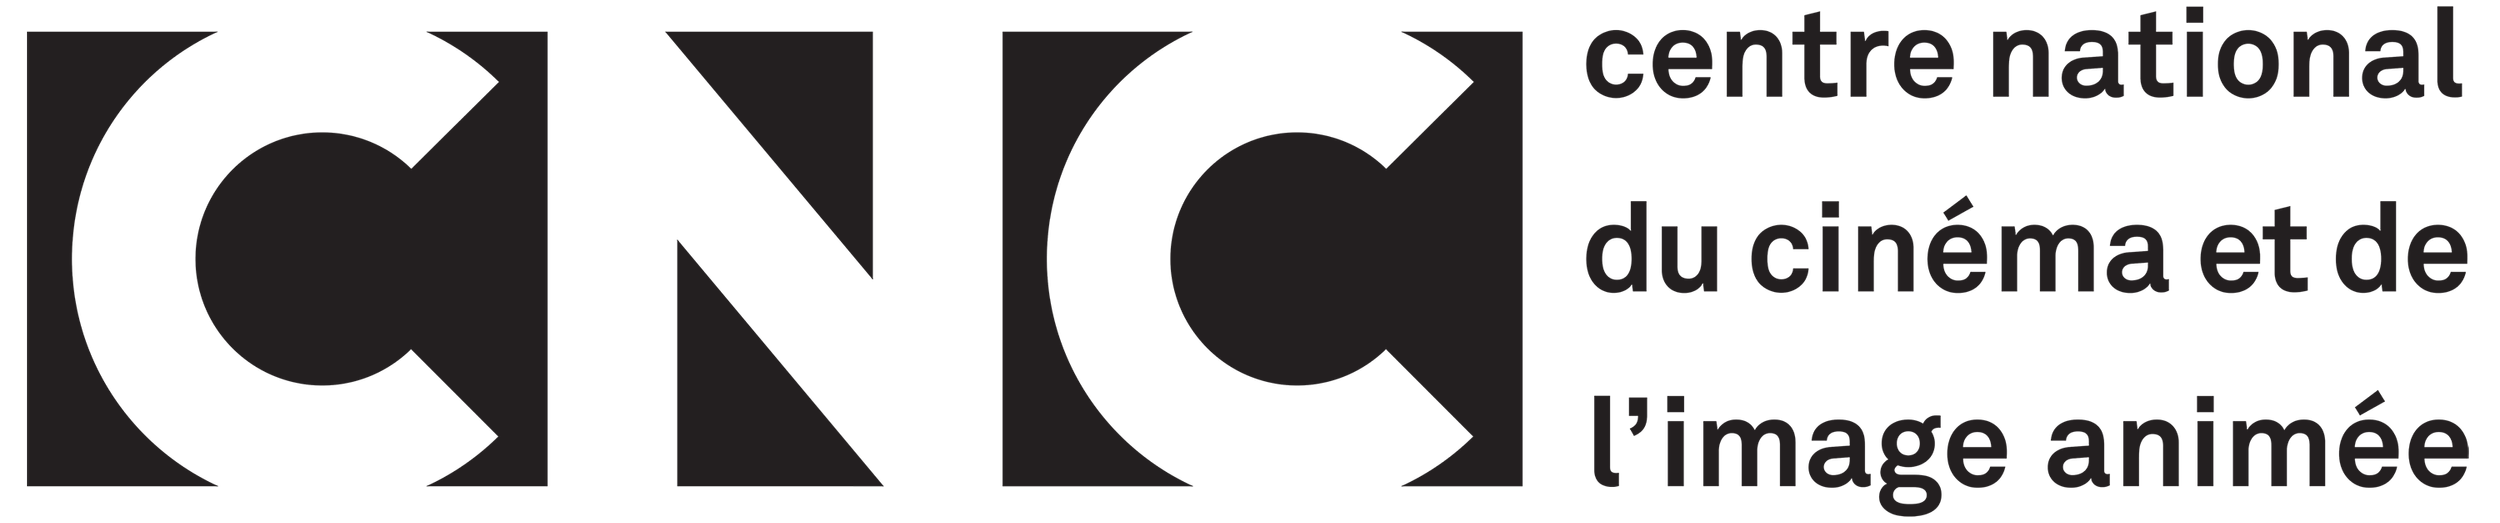 logo développé noir.png